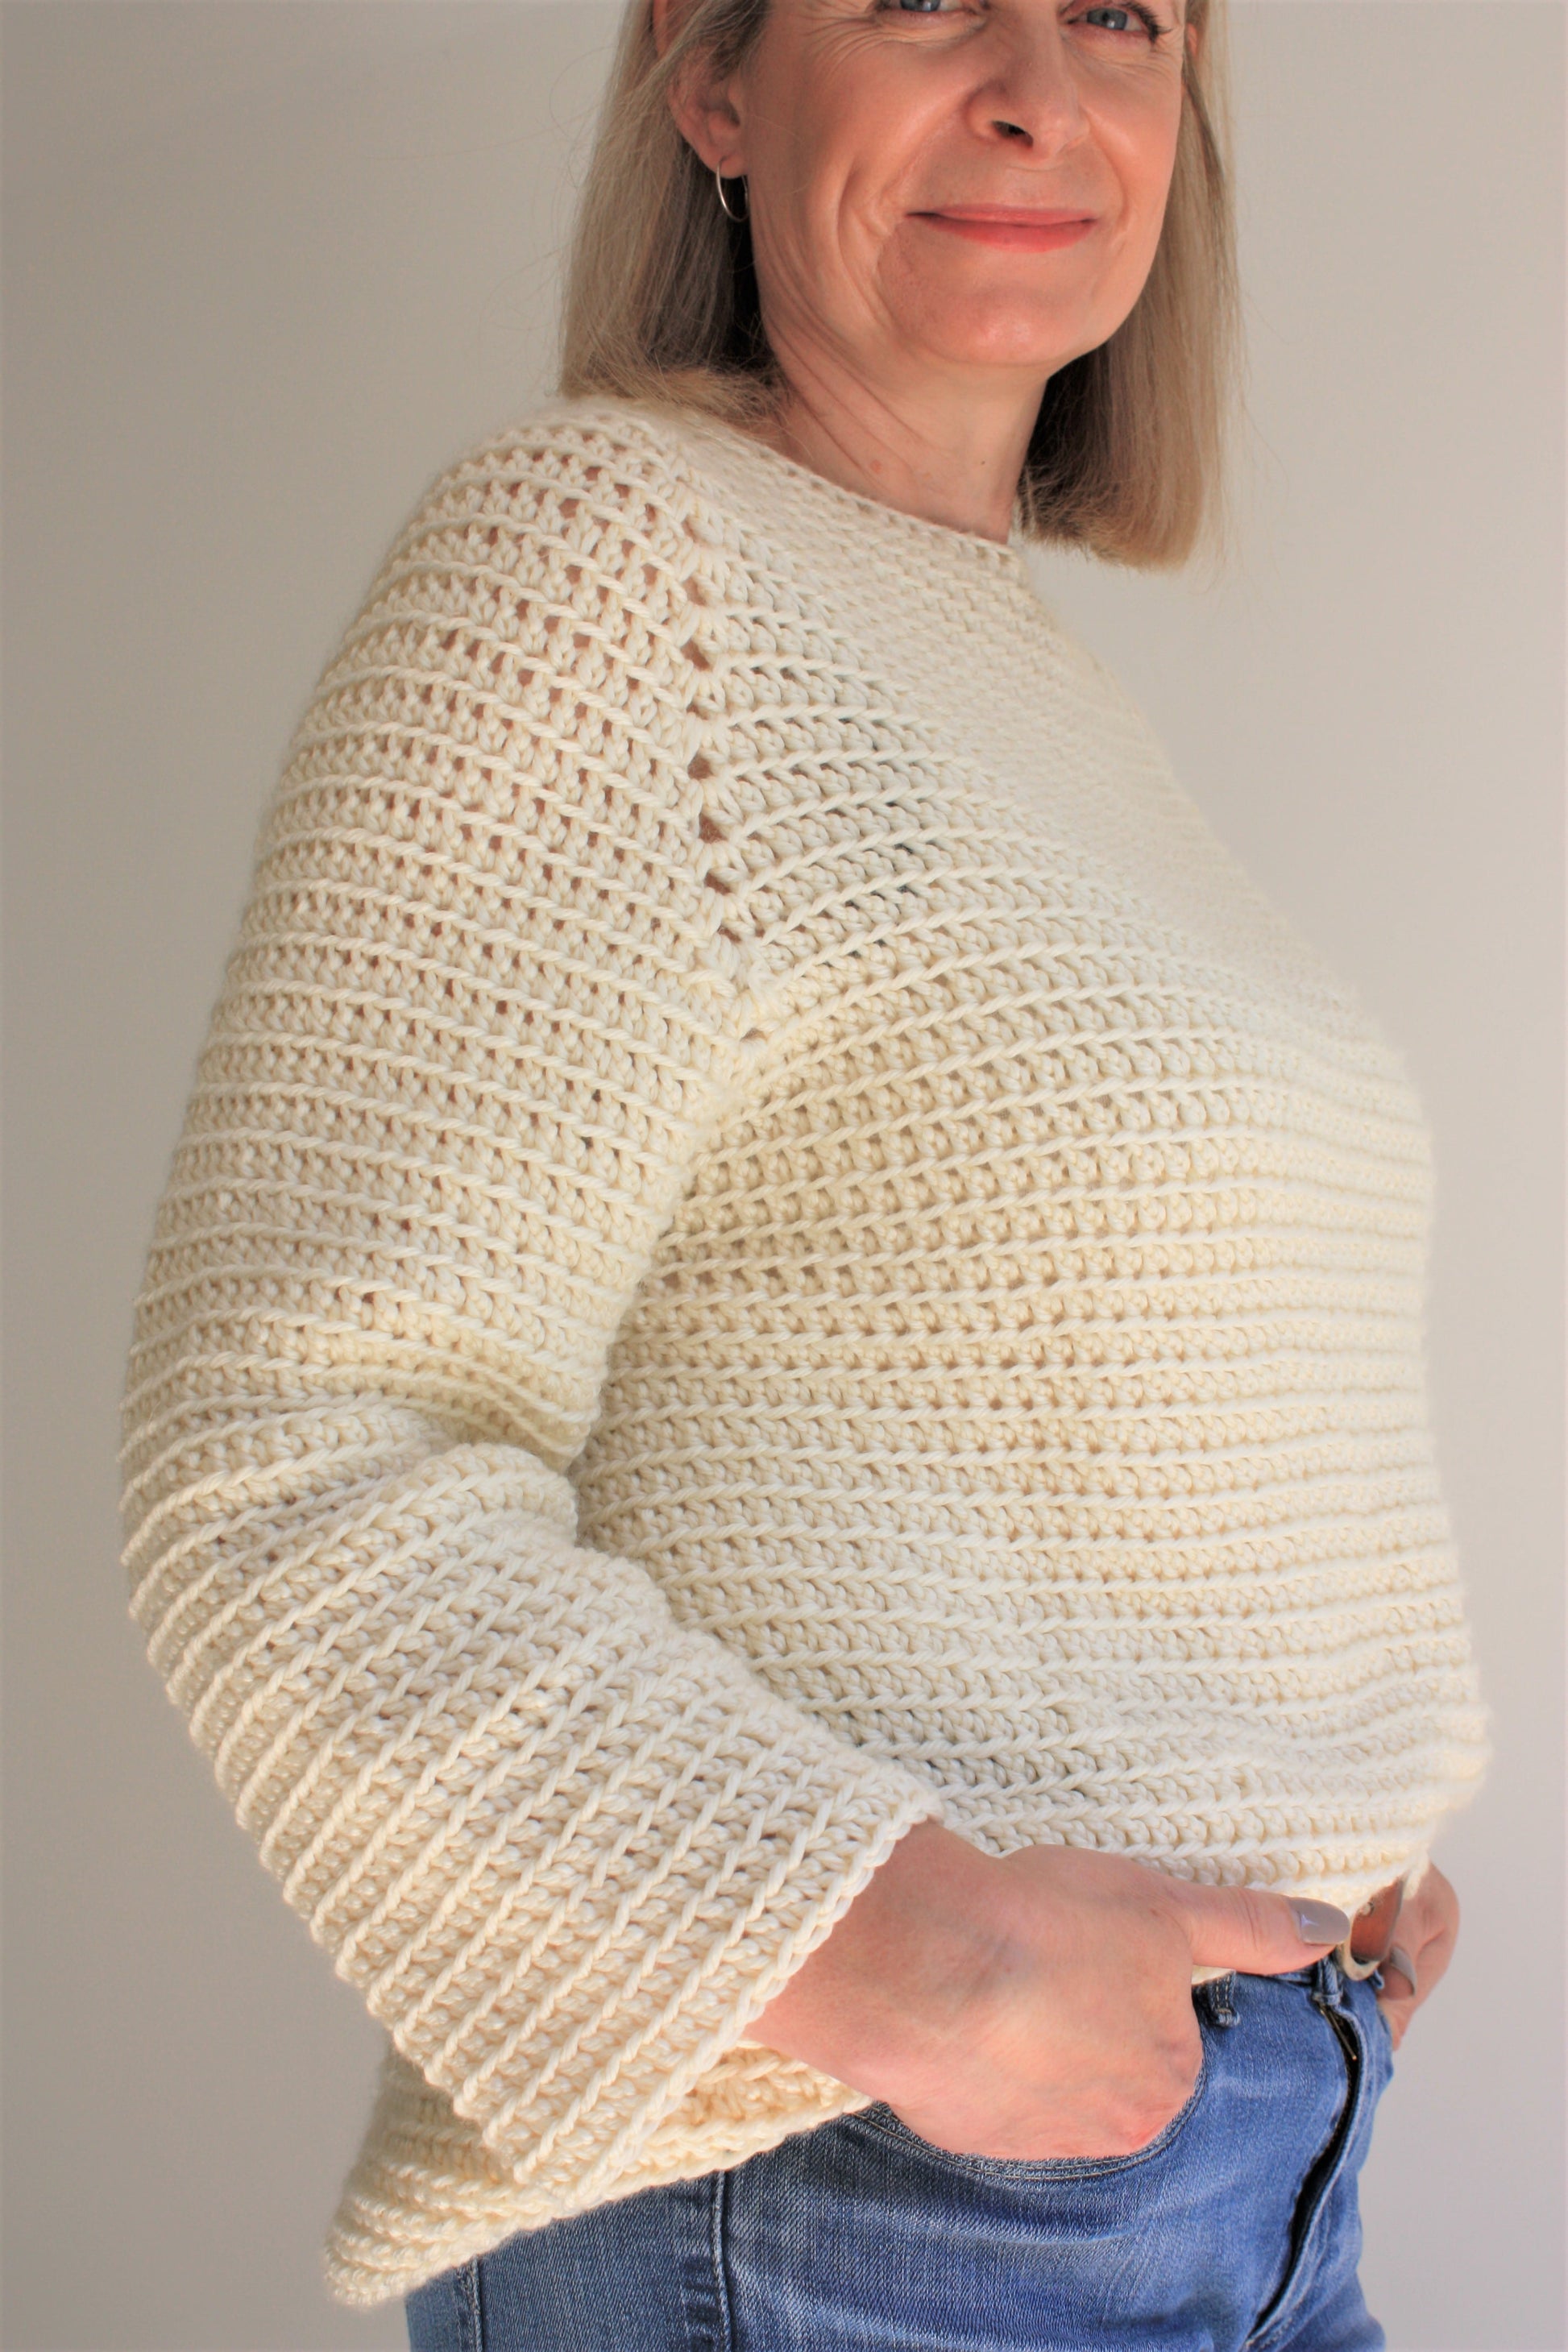 St Ives Slouchy Oversize Sweater - Easy Crochet Pattern – King & Eye